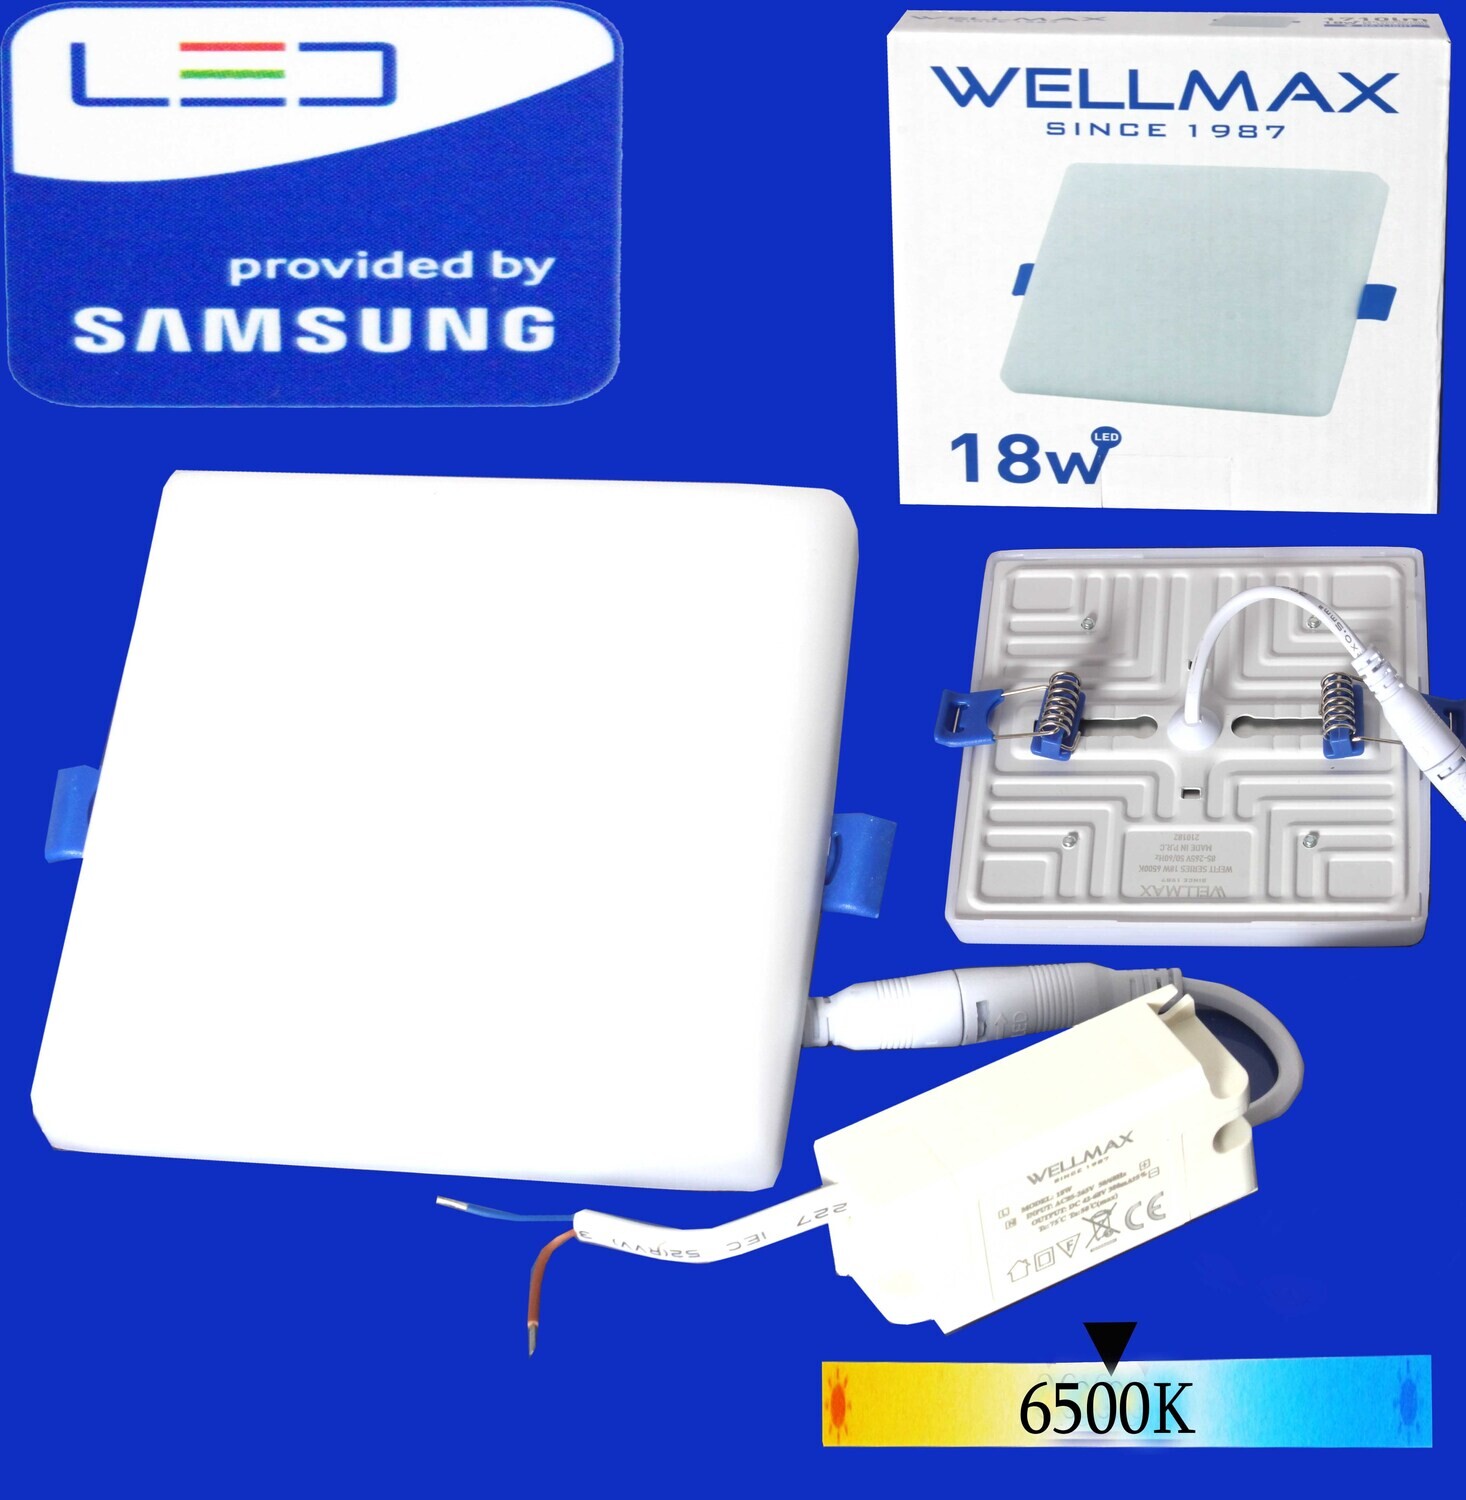 Էլ.պլաֆոն LED Wellmax քառակուսի wefit 18W 6500K